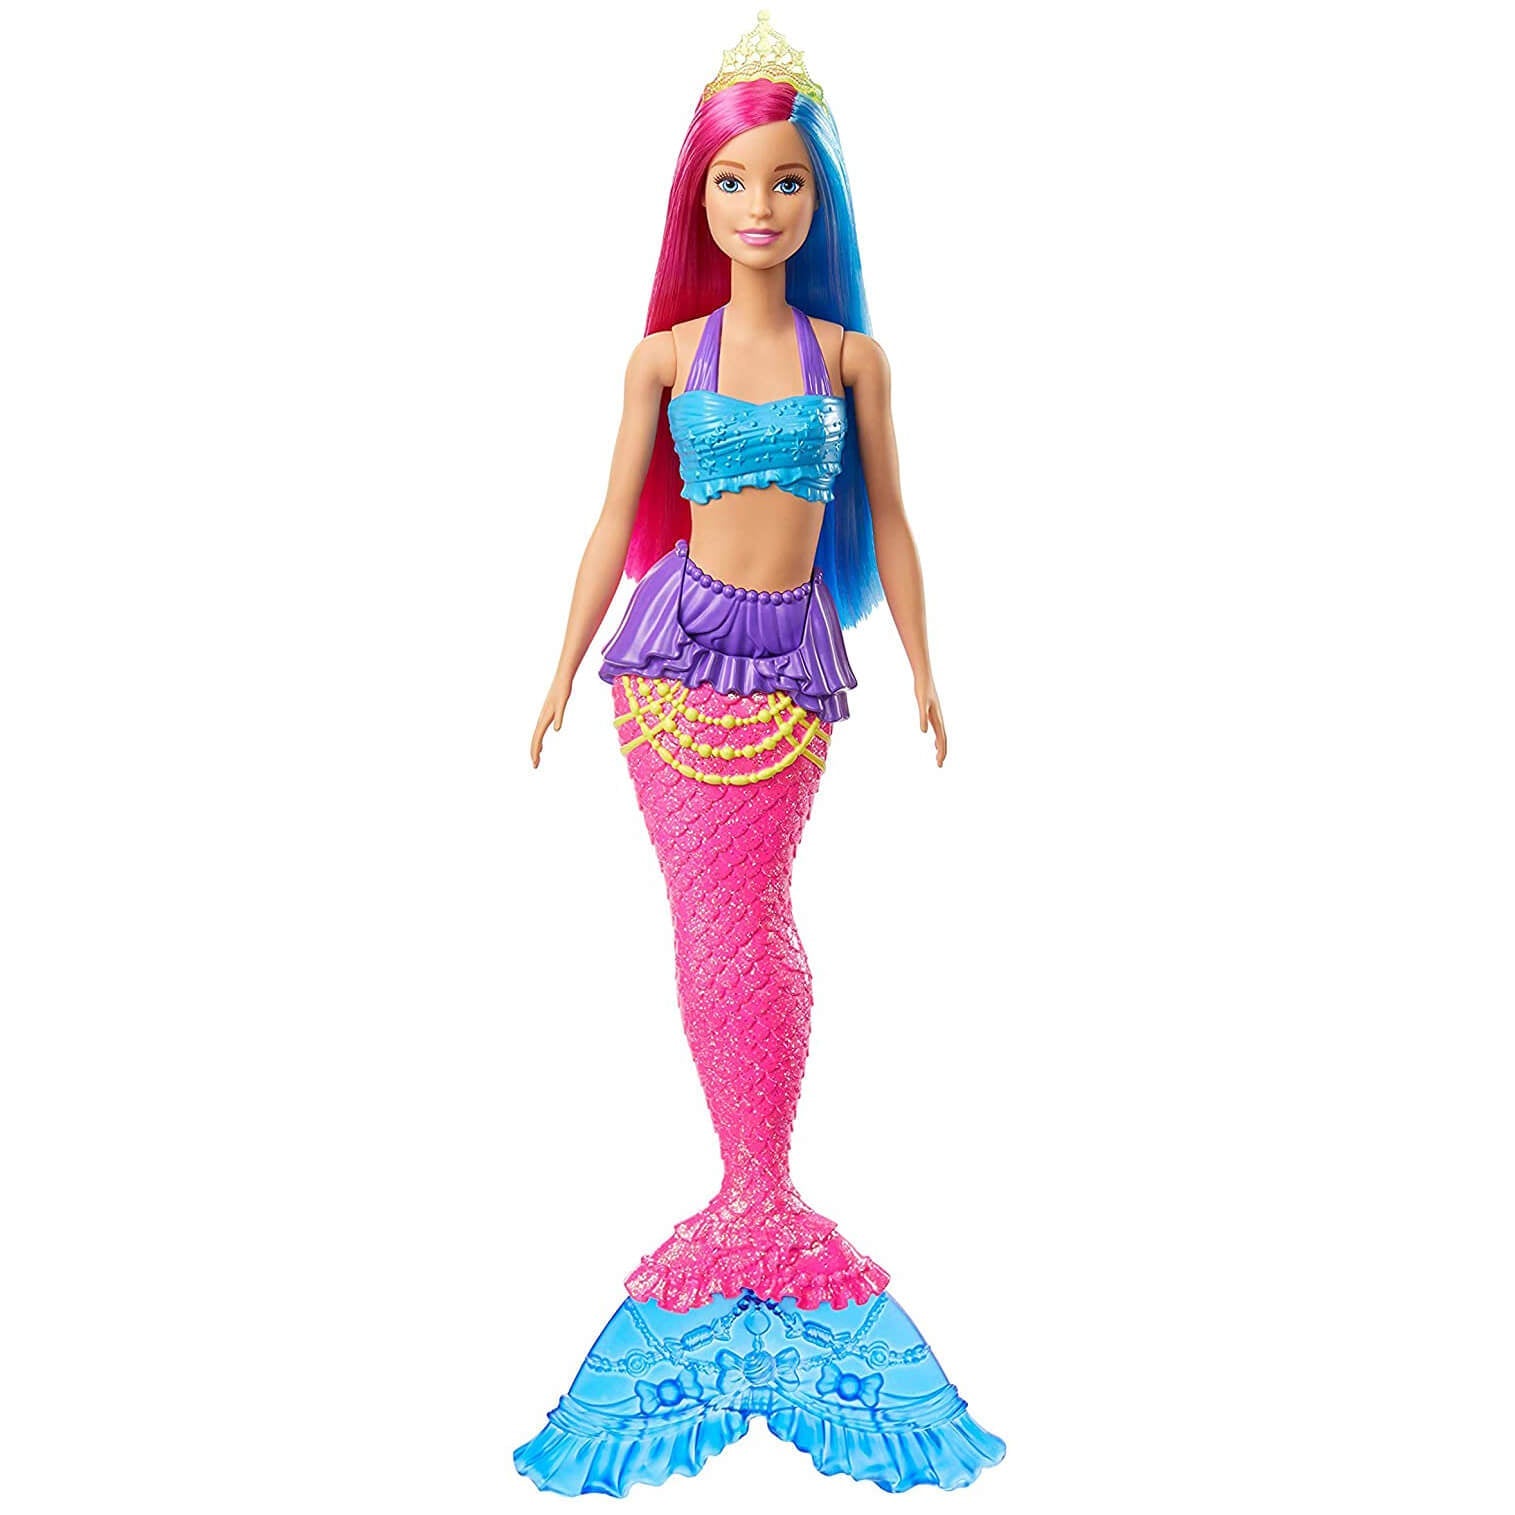 Barbie Dreamtopia Mermaid 12-Inch Doll (Pink and Blue Hair)